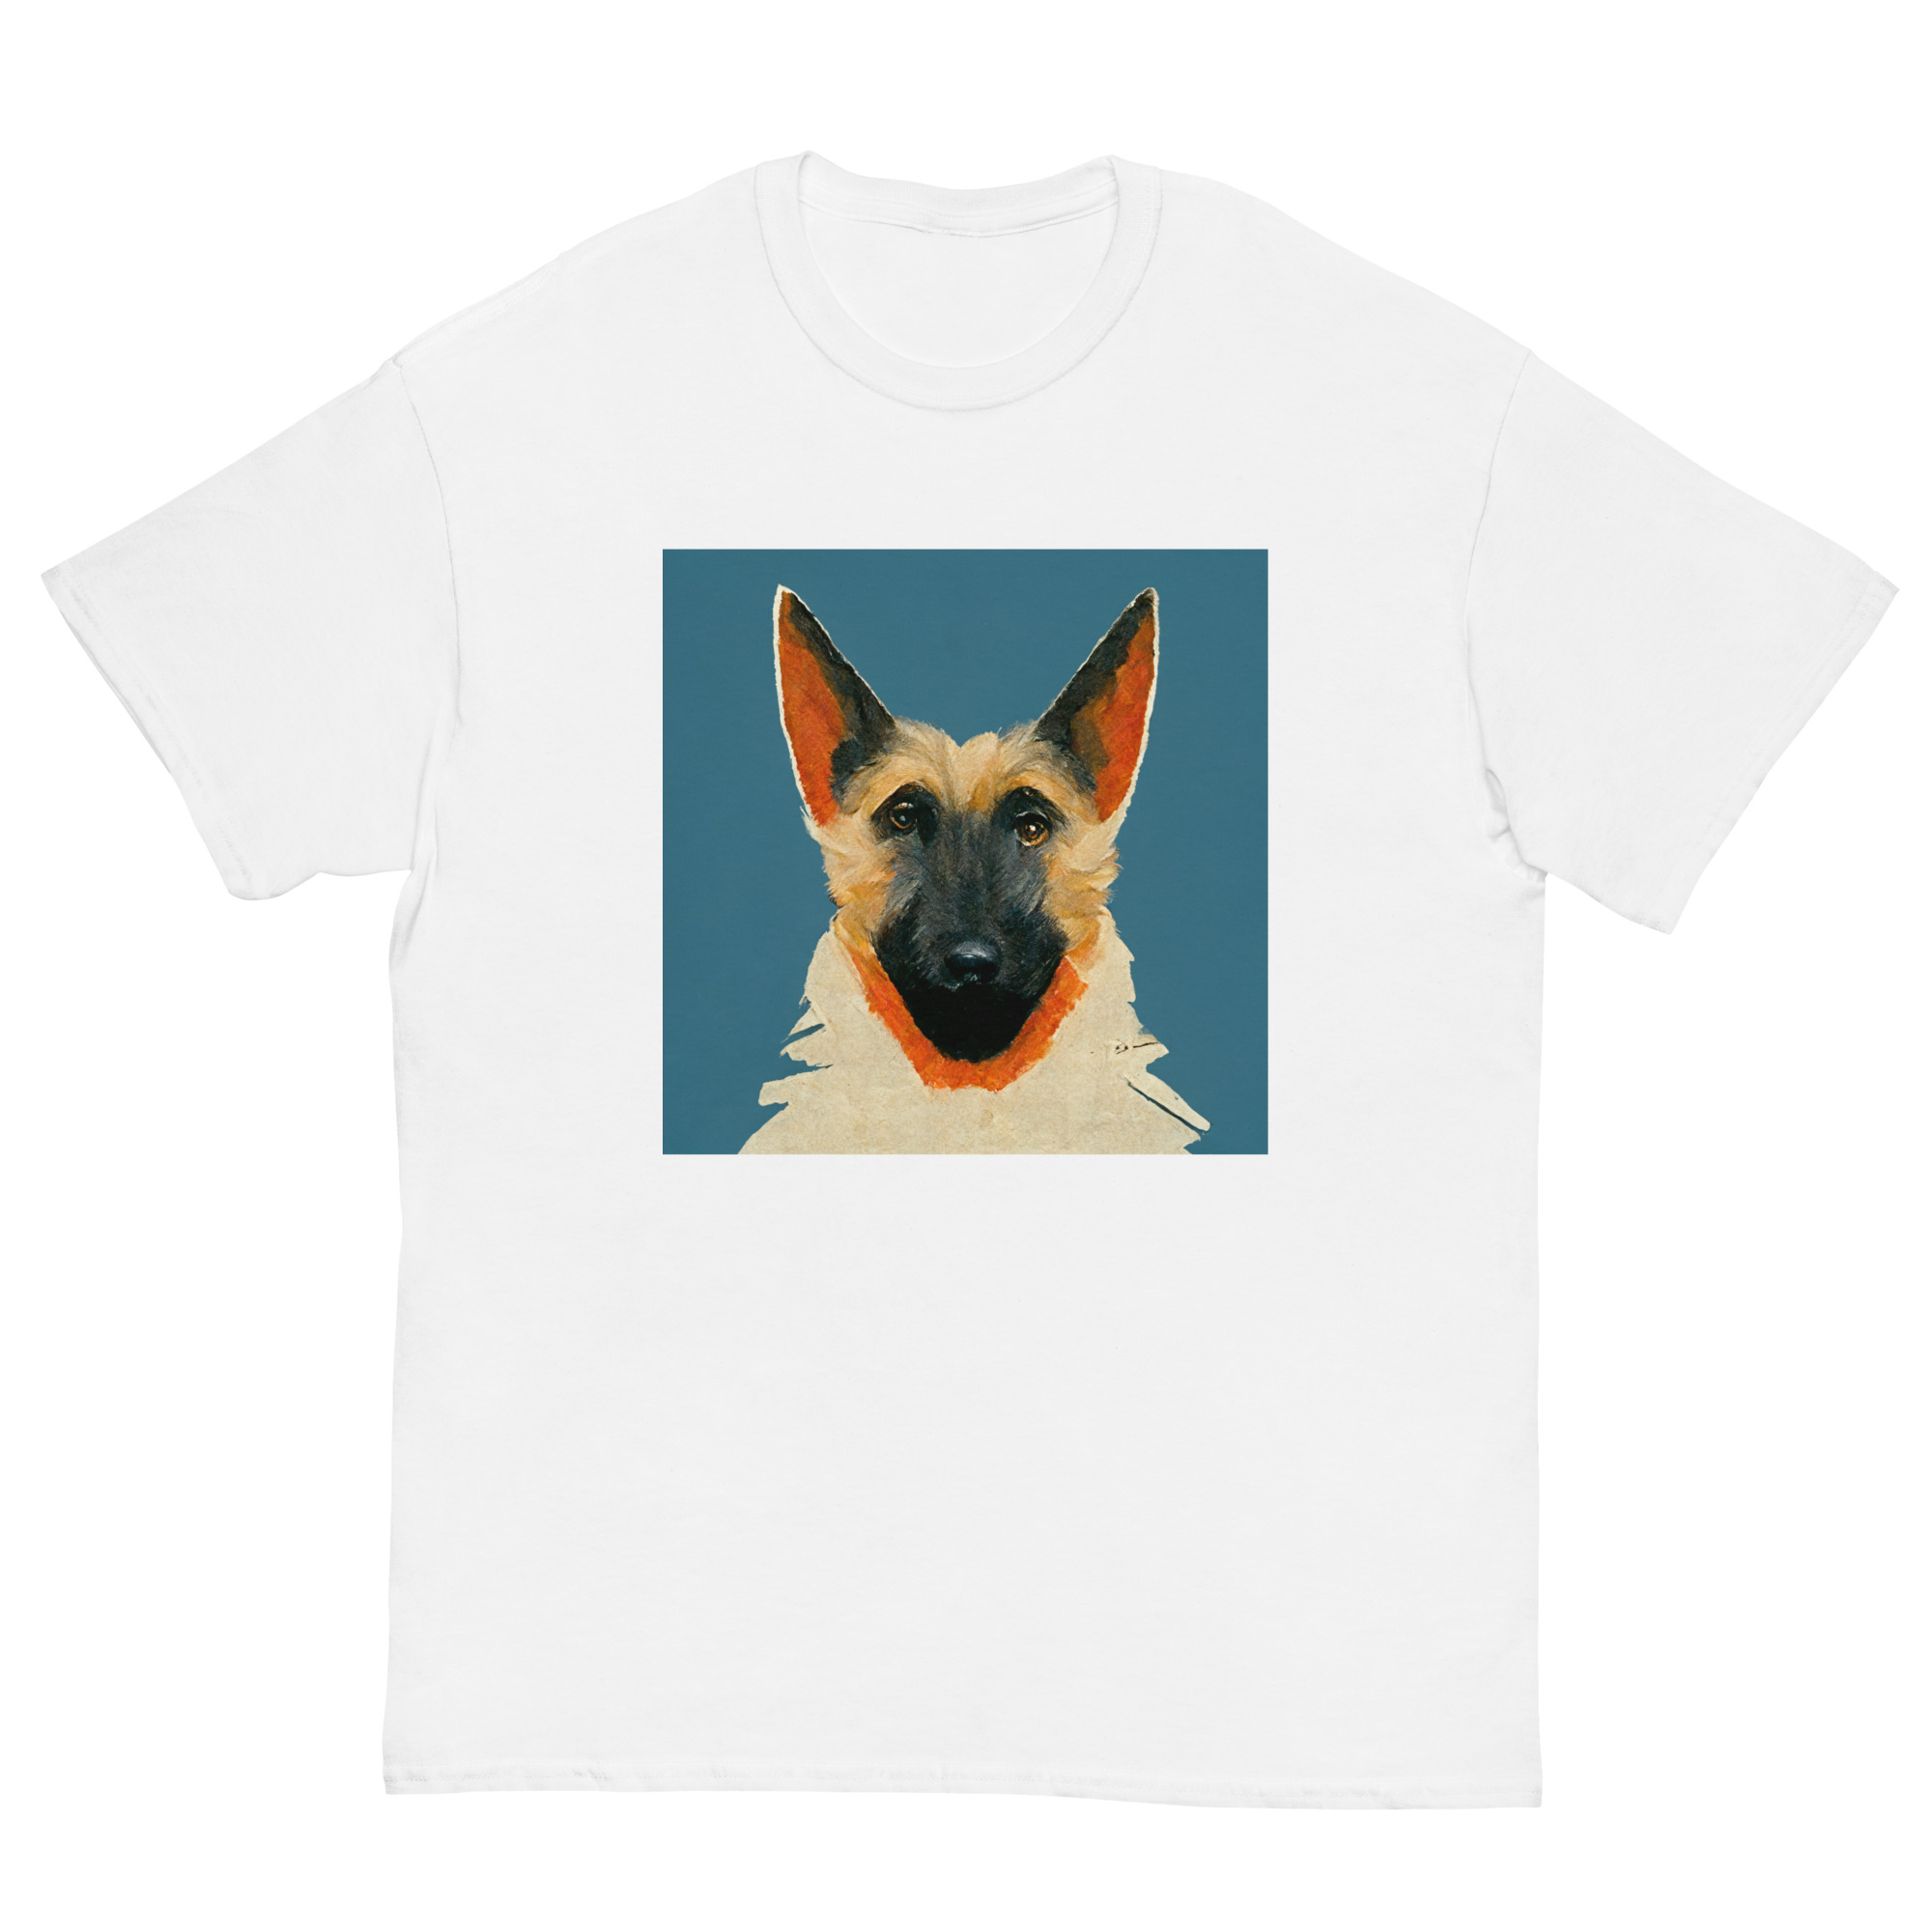 Georgia O'Keeffe Style German Shepherd T-Shirt | DOGGO art